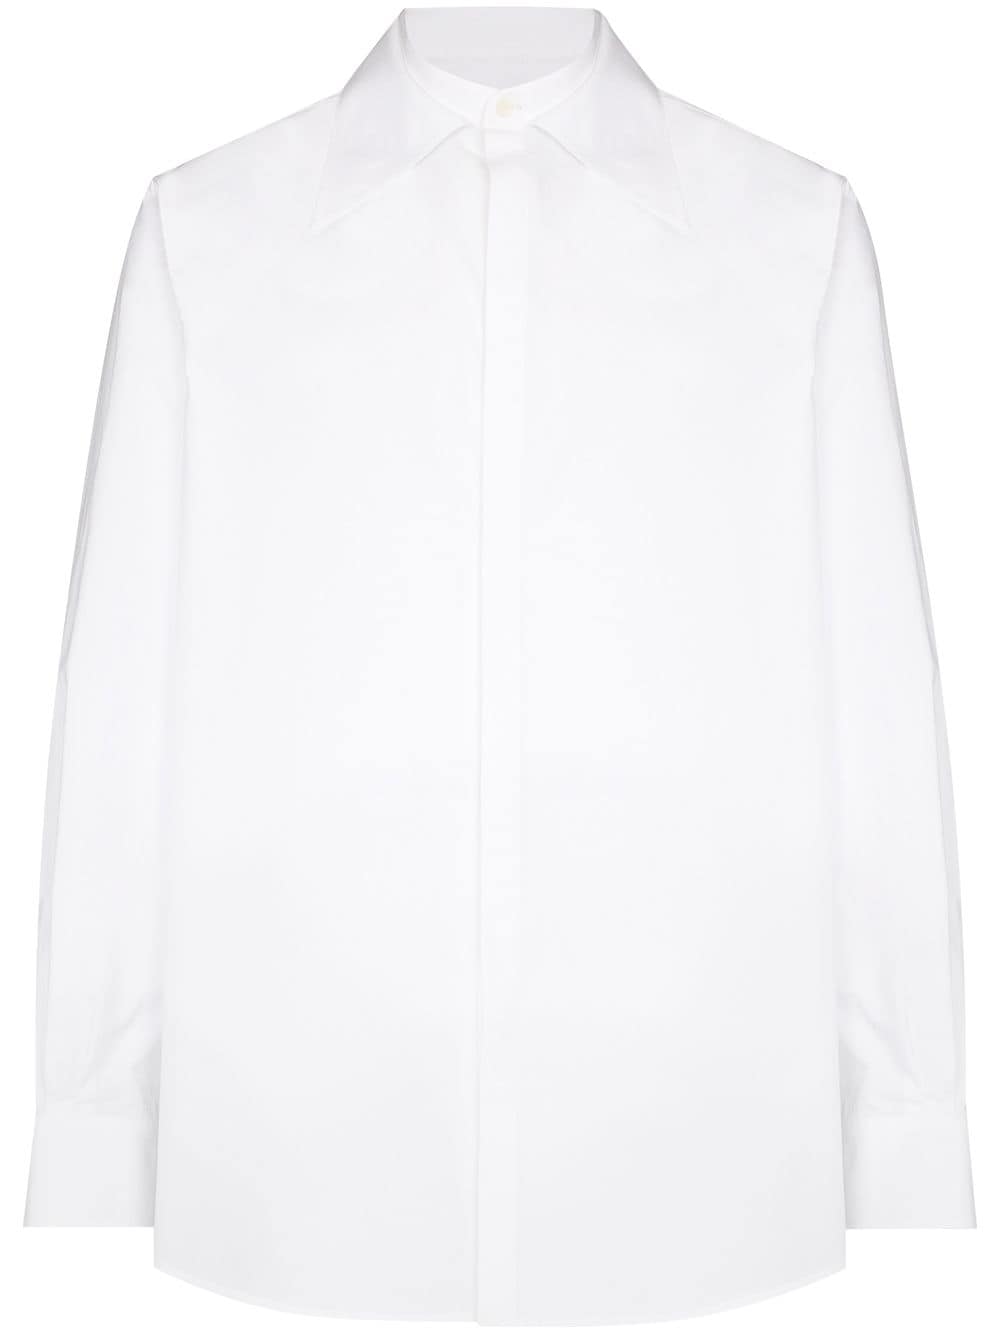 Valentino Garavani Oversize Collar Shirt - Farfetch